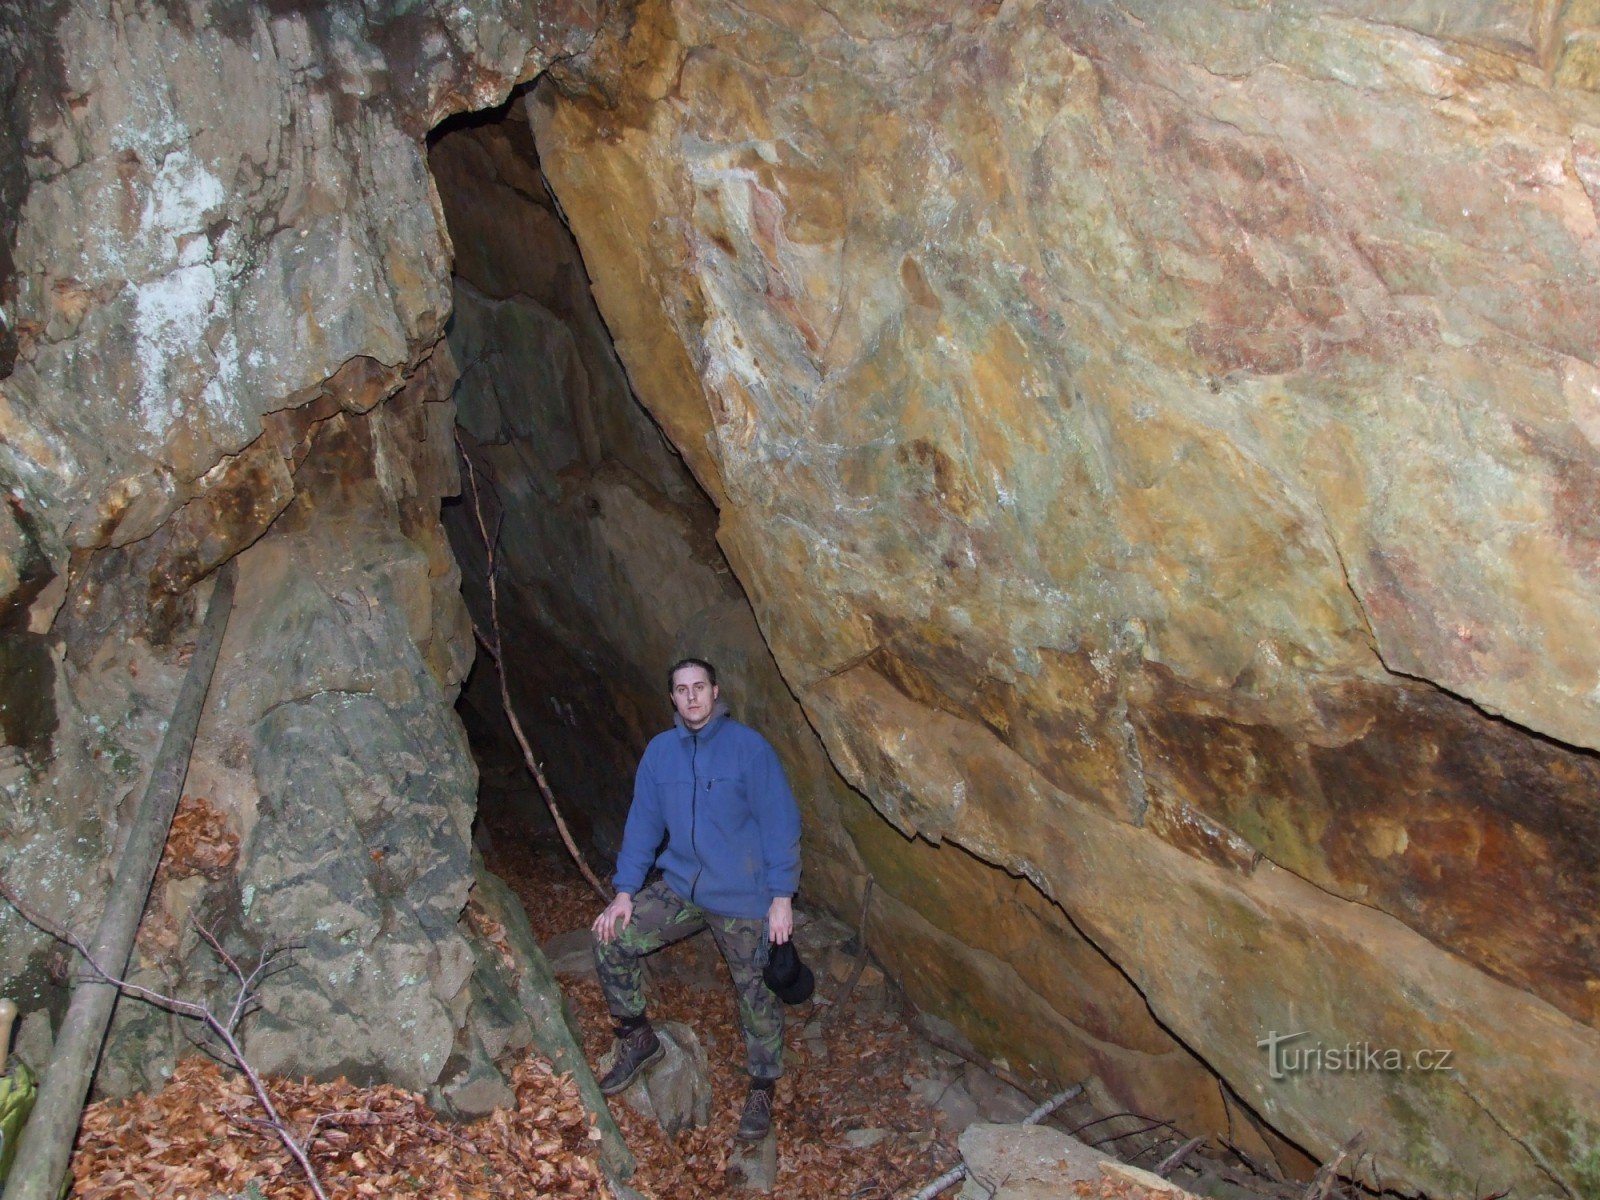 Educational mining trail Zlatý Chlum